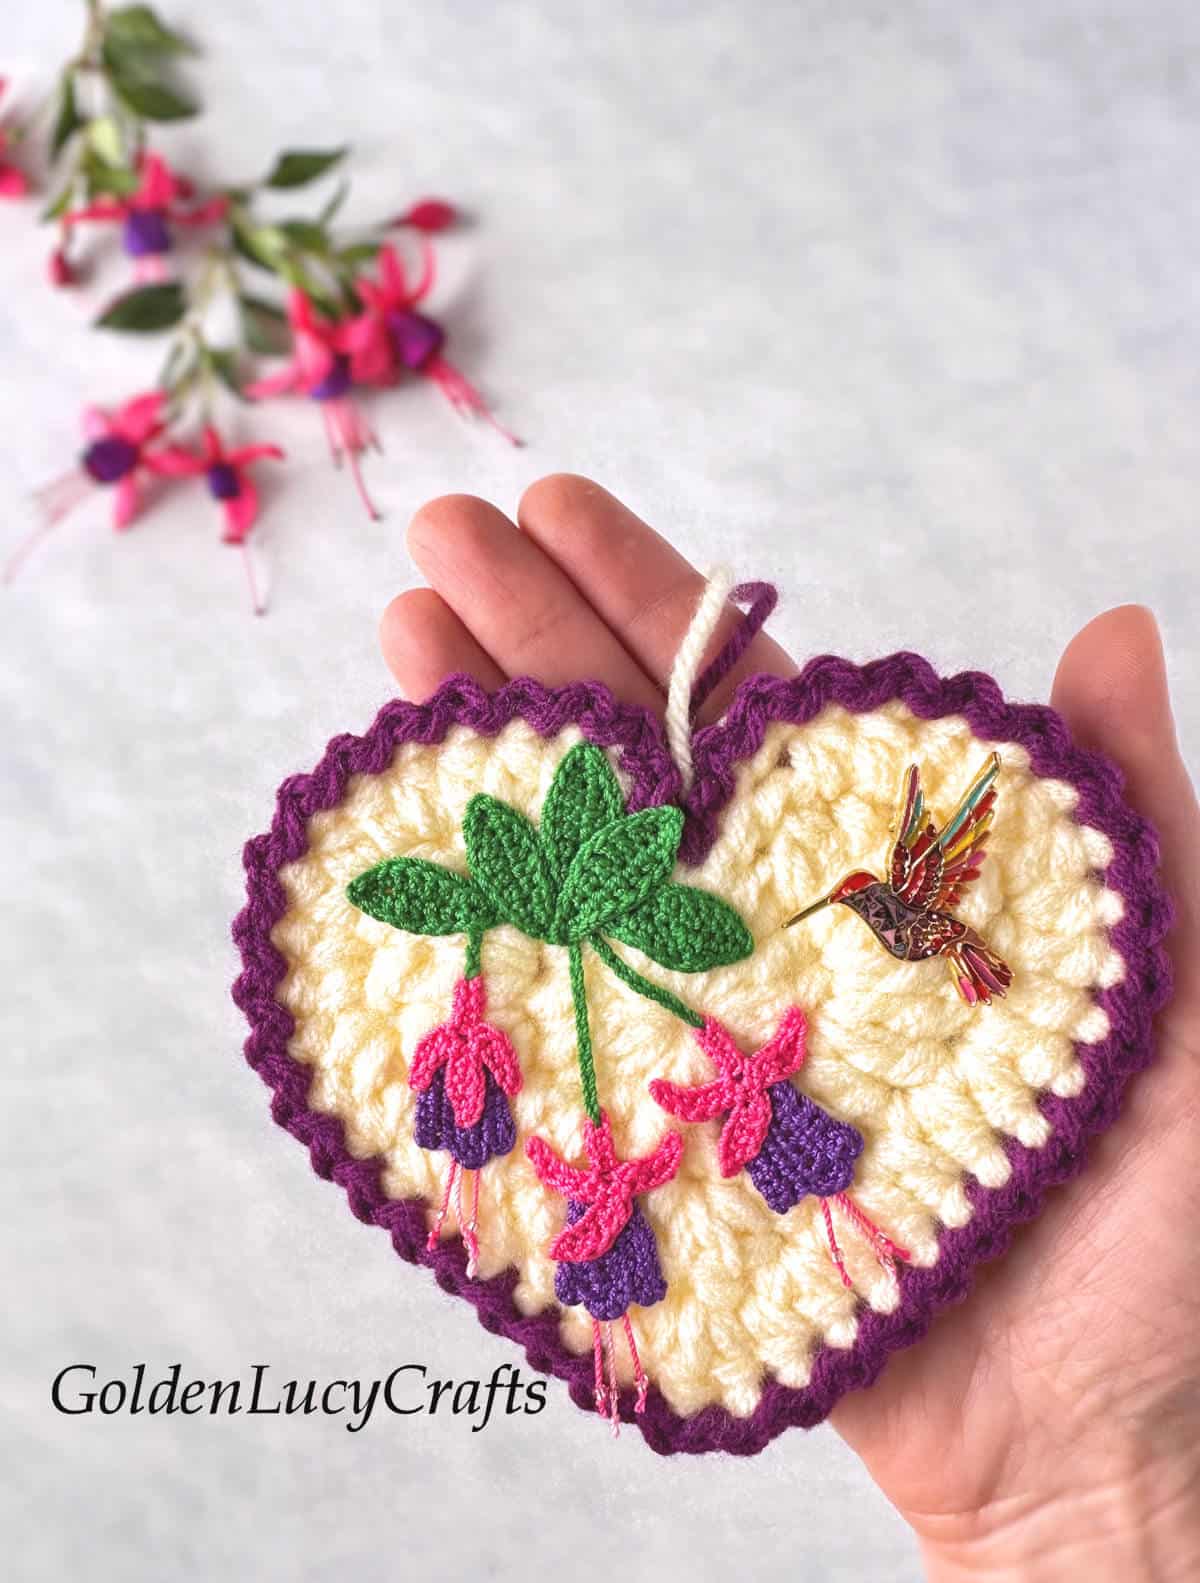 Crochet fuchsia heart ornament in the palm of a hand.